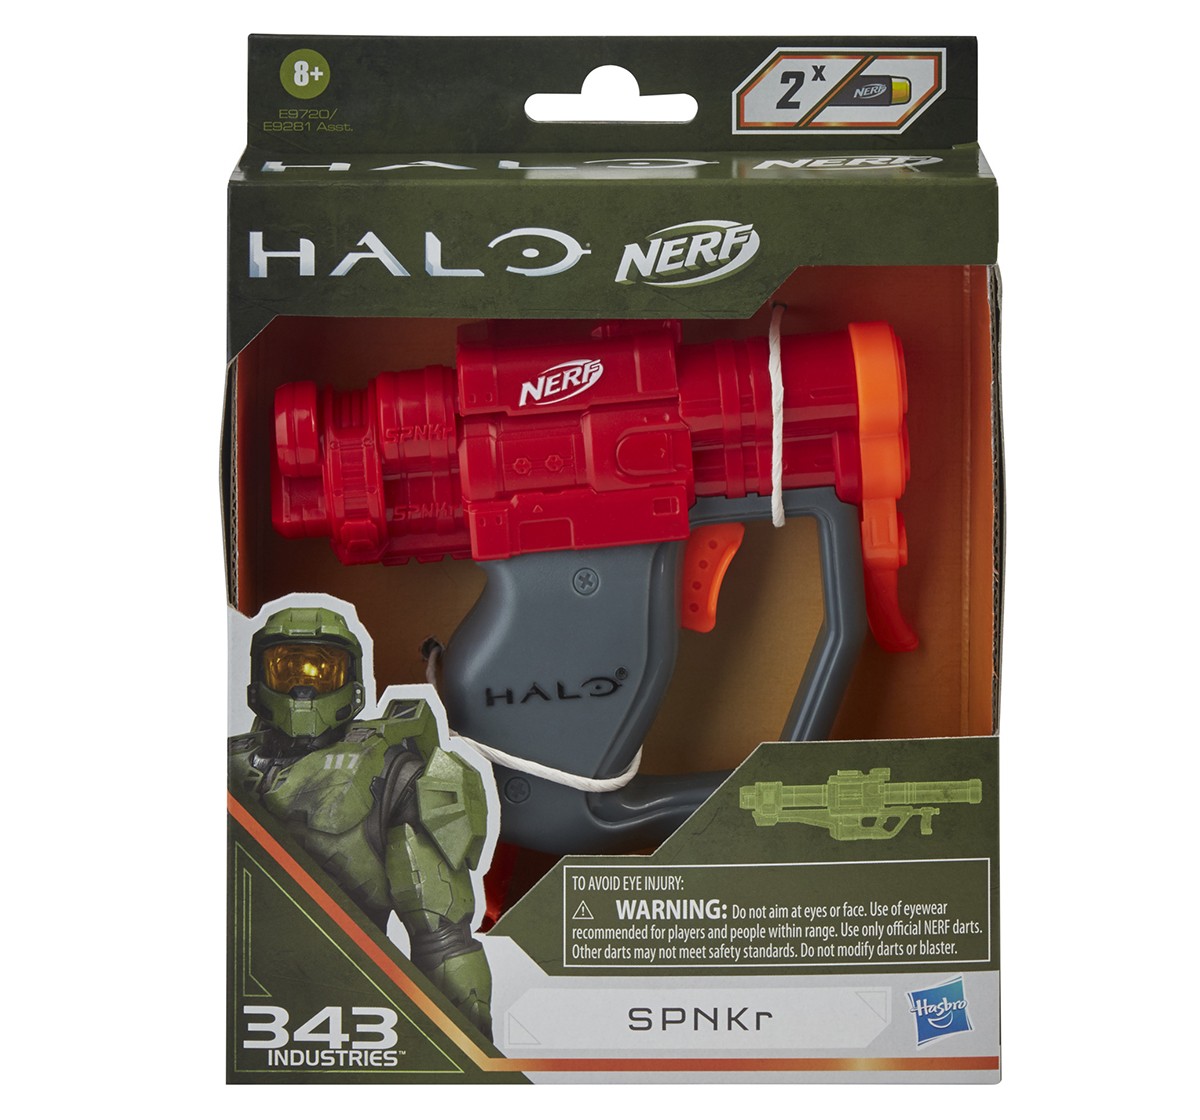 NERF MicroShots Halo Needler Blaster with 2 NERF Darts, Multicolor, 8Y+